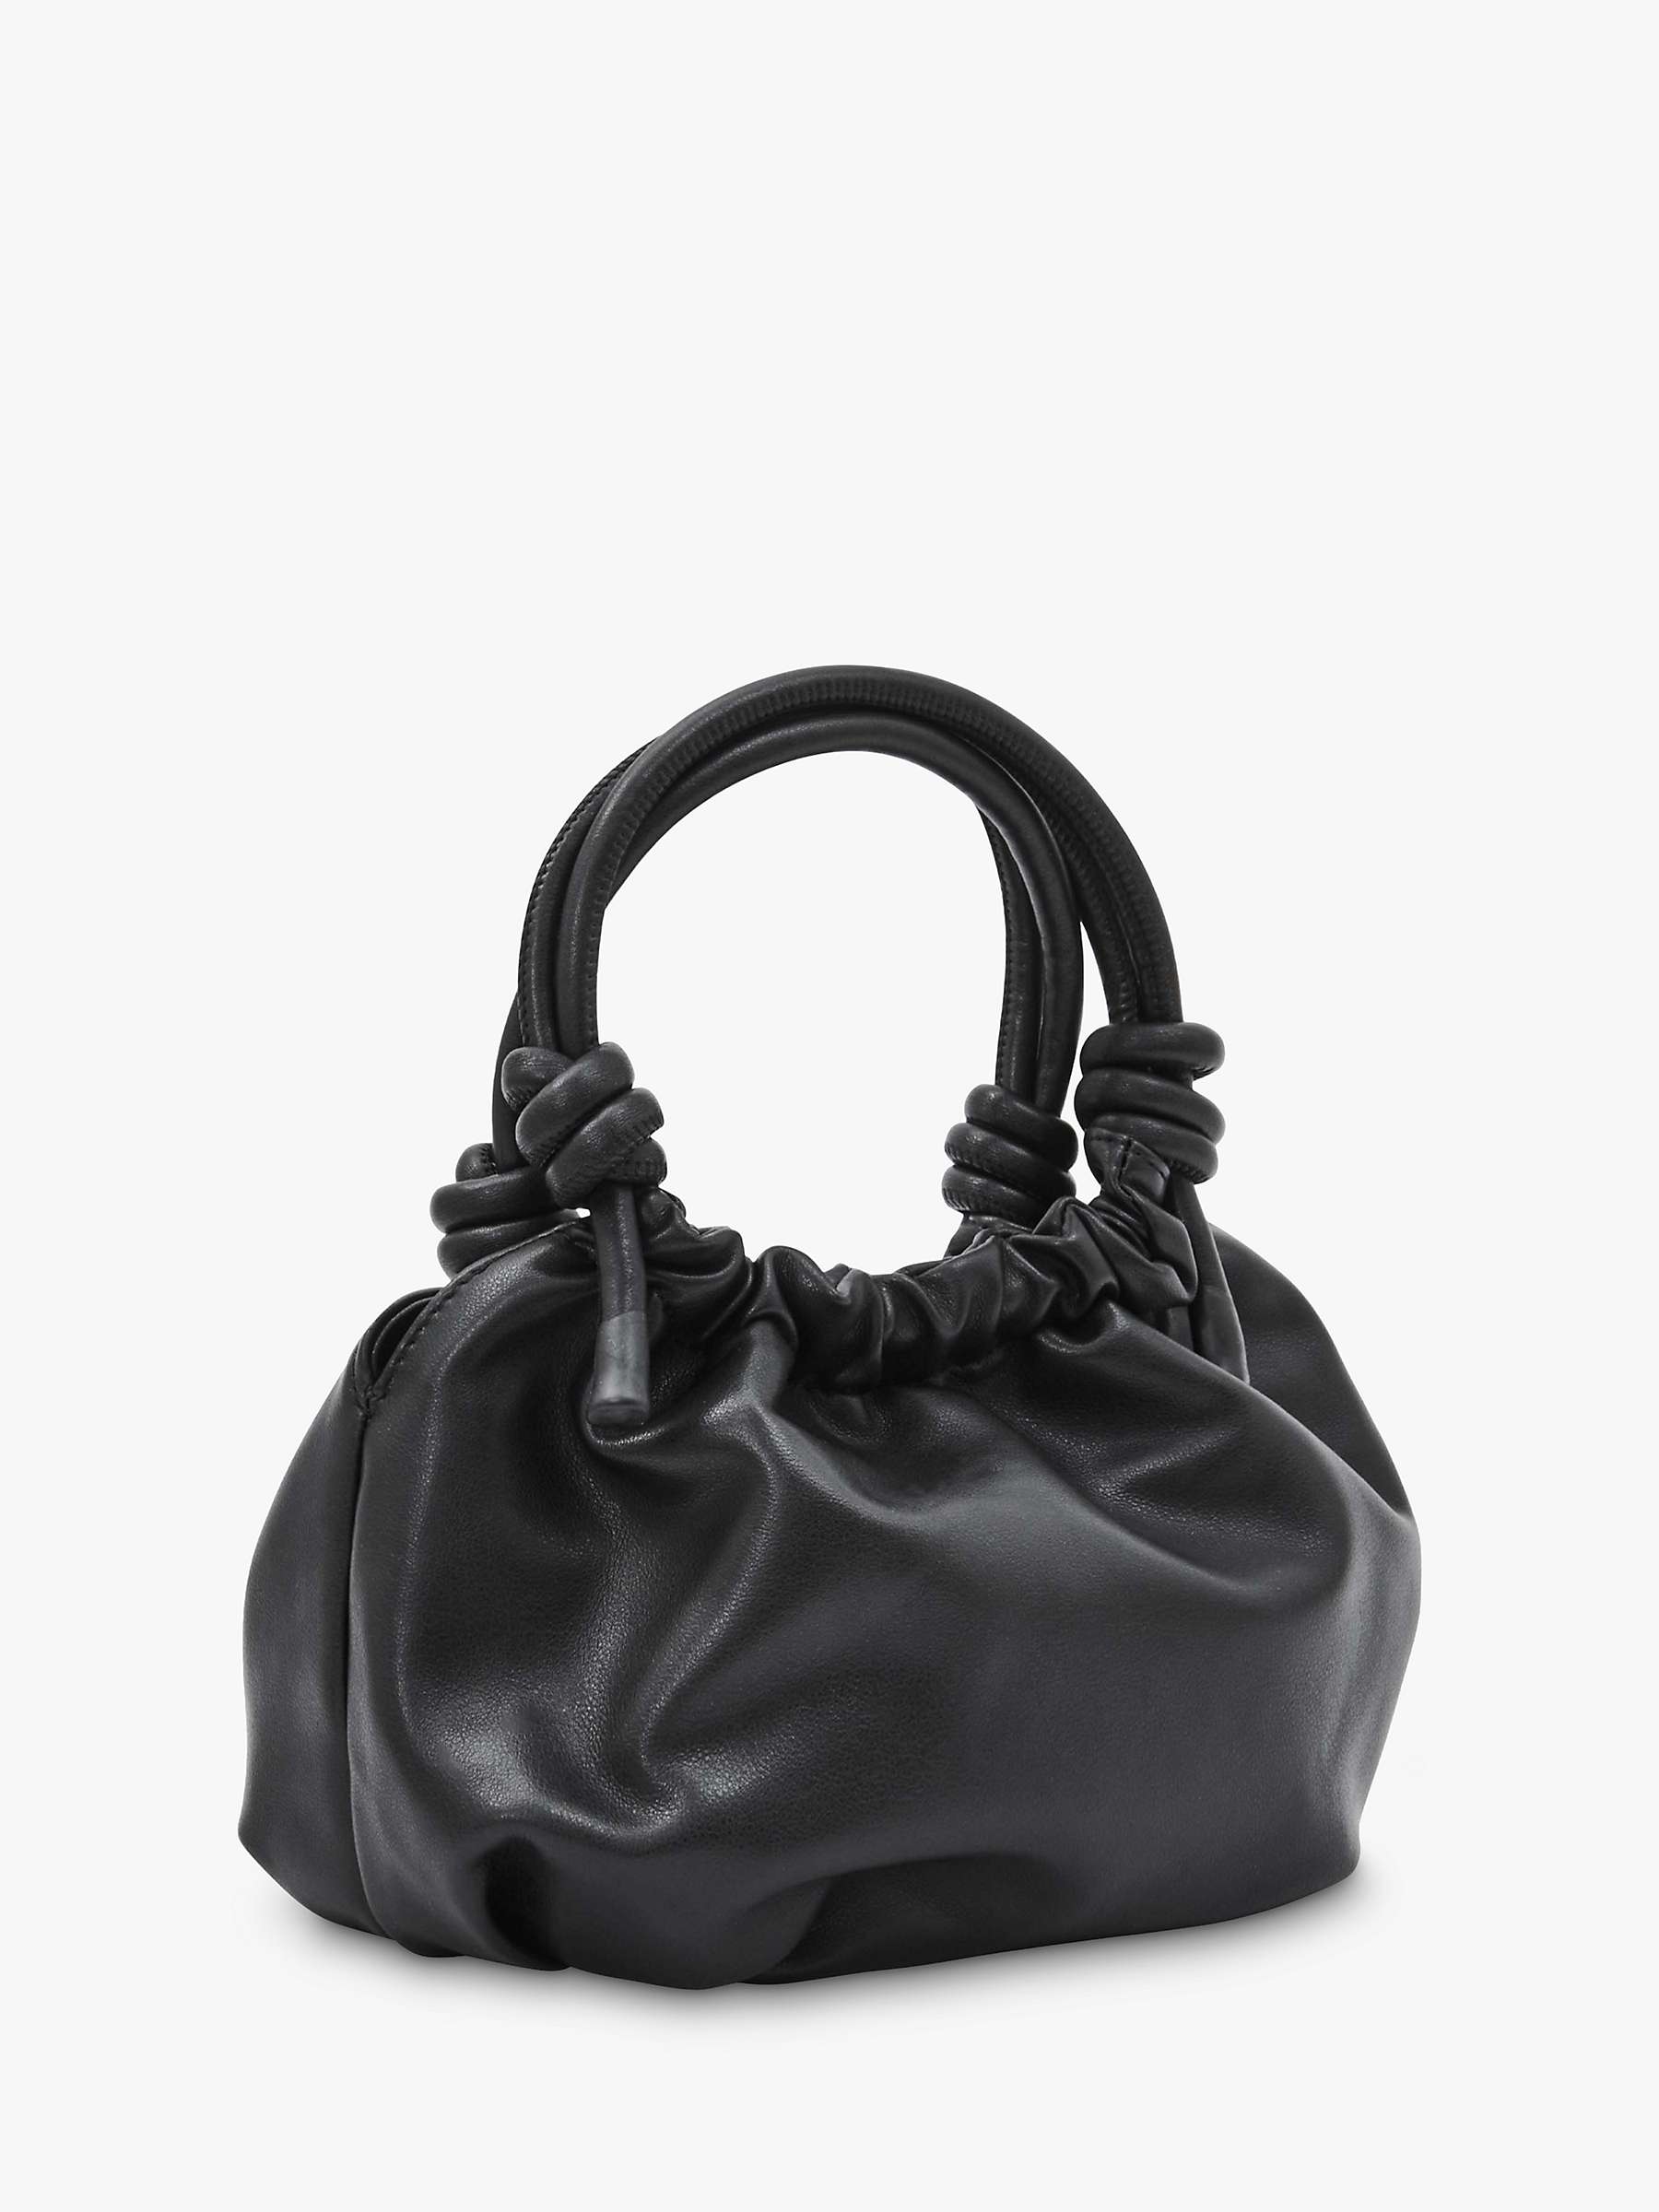 HVISK Jolly Twill Grab Bag, Black at John Lewis & Partners